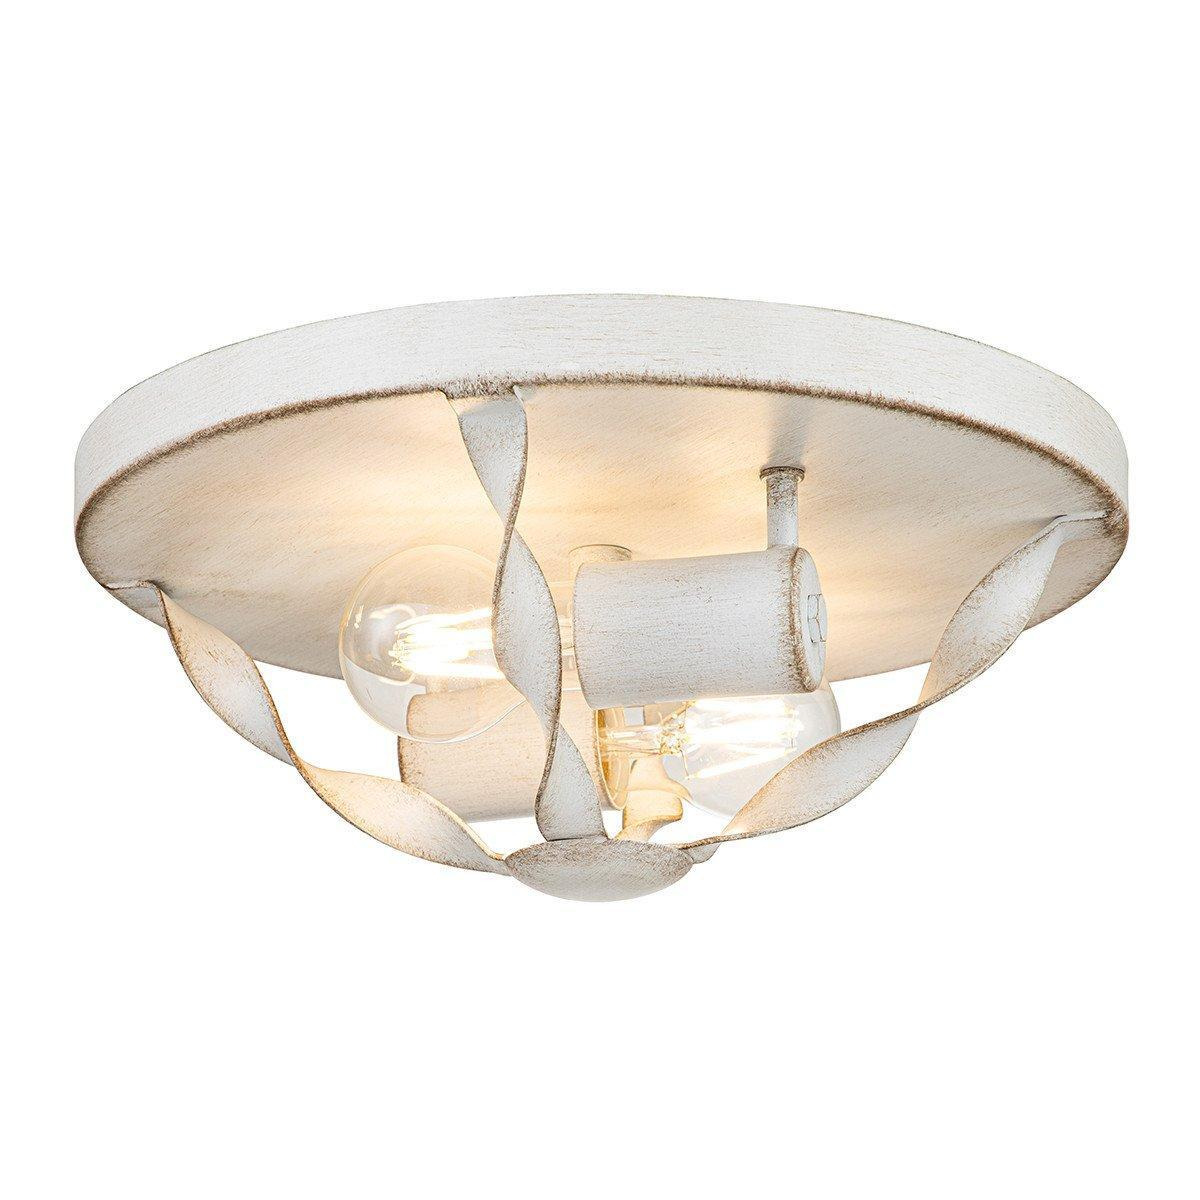 Quoizel Bradbury Semi Flush Ceiling Light Antique White - image 1